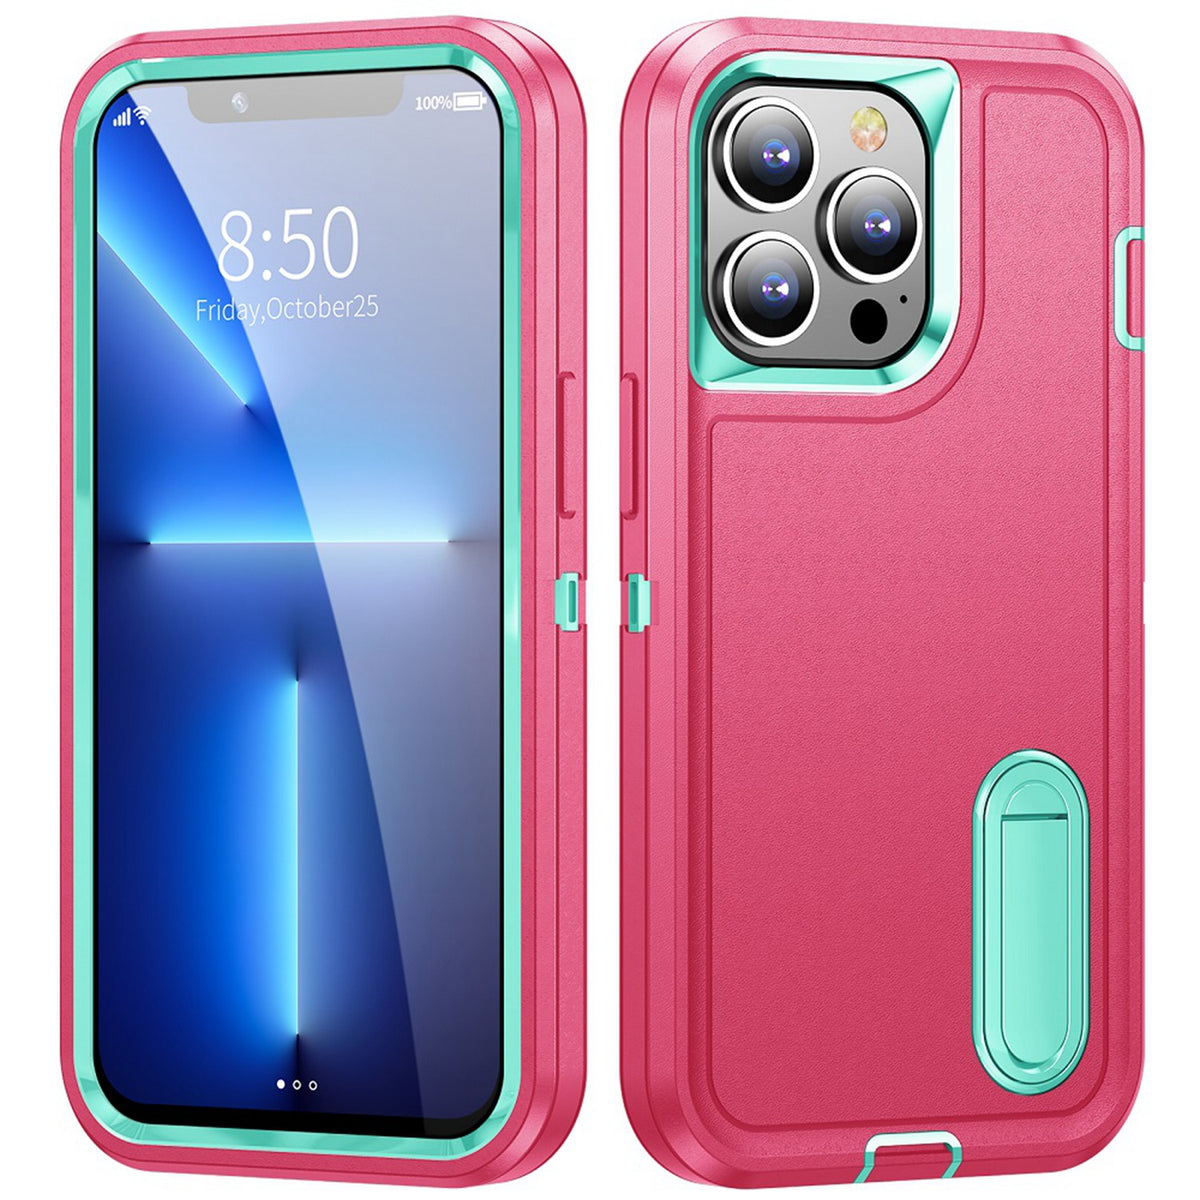 Iphone 11 (6.1Inch) Tough Kickstand Case Pink Teal